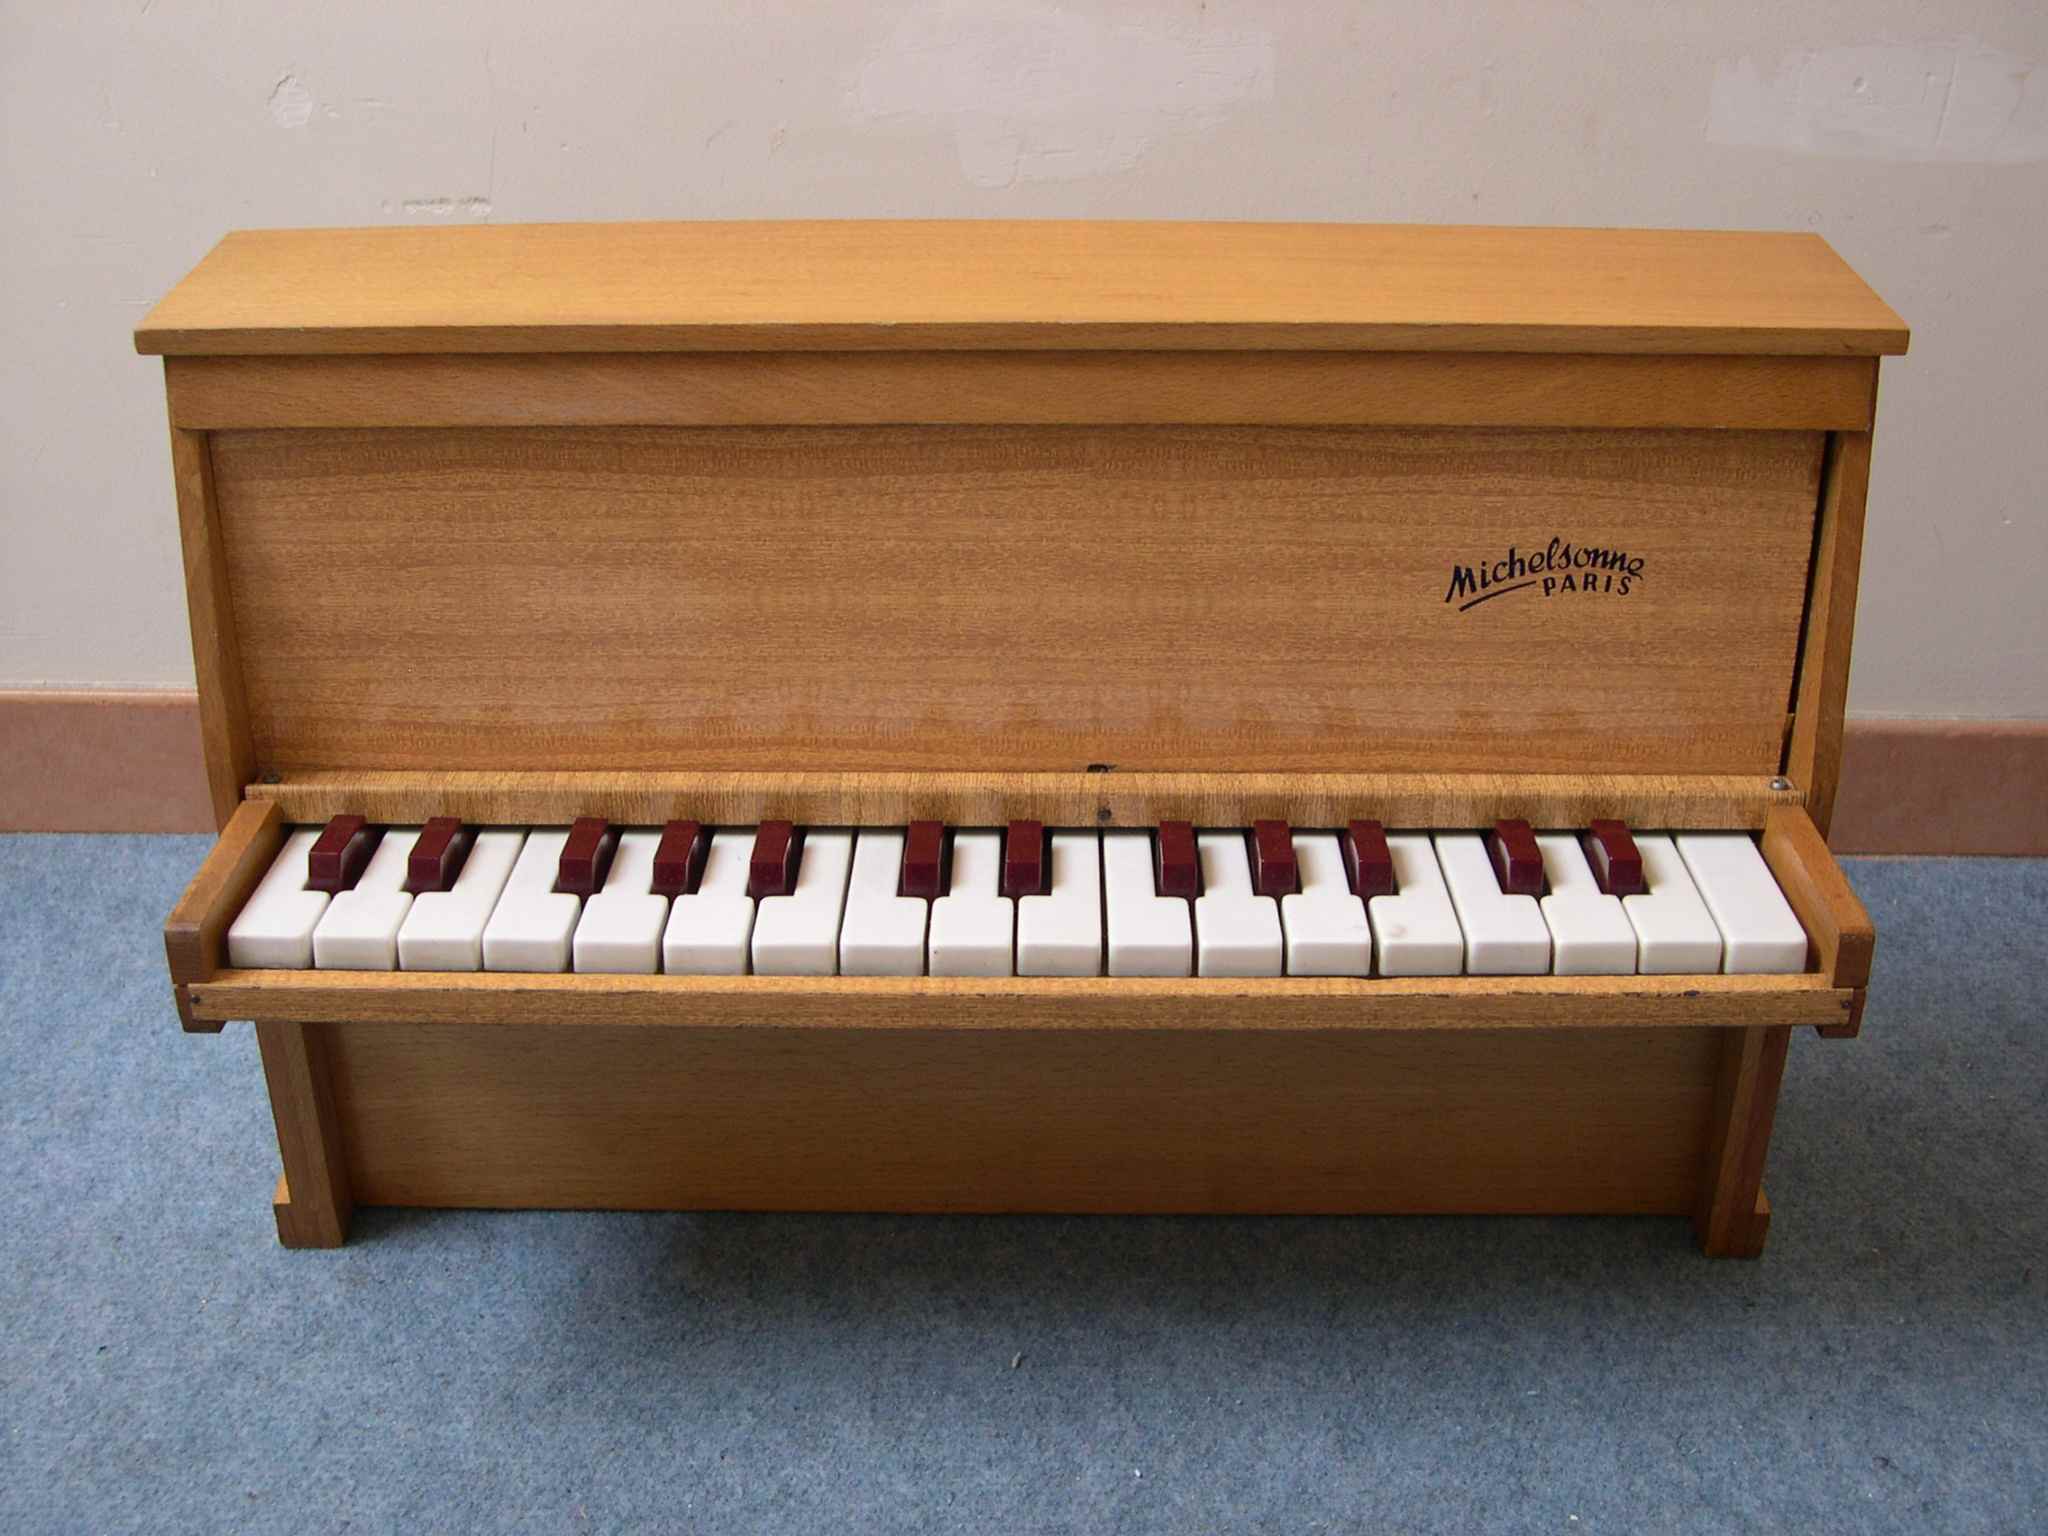 michelsonne-paris-toy-piano-30-keys-75096.jpg